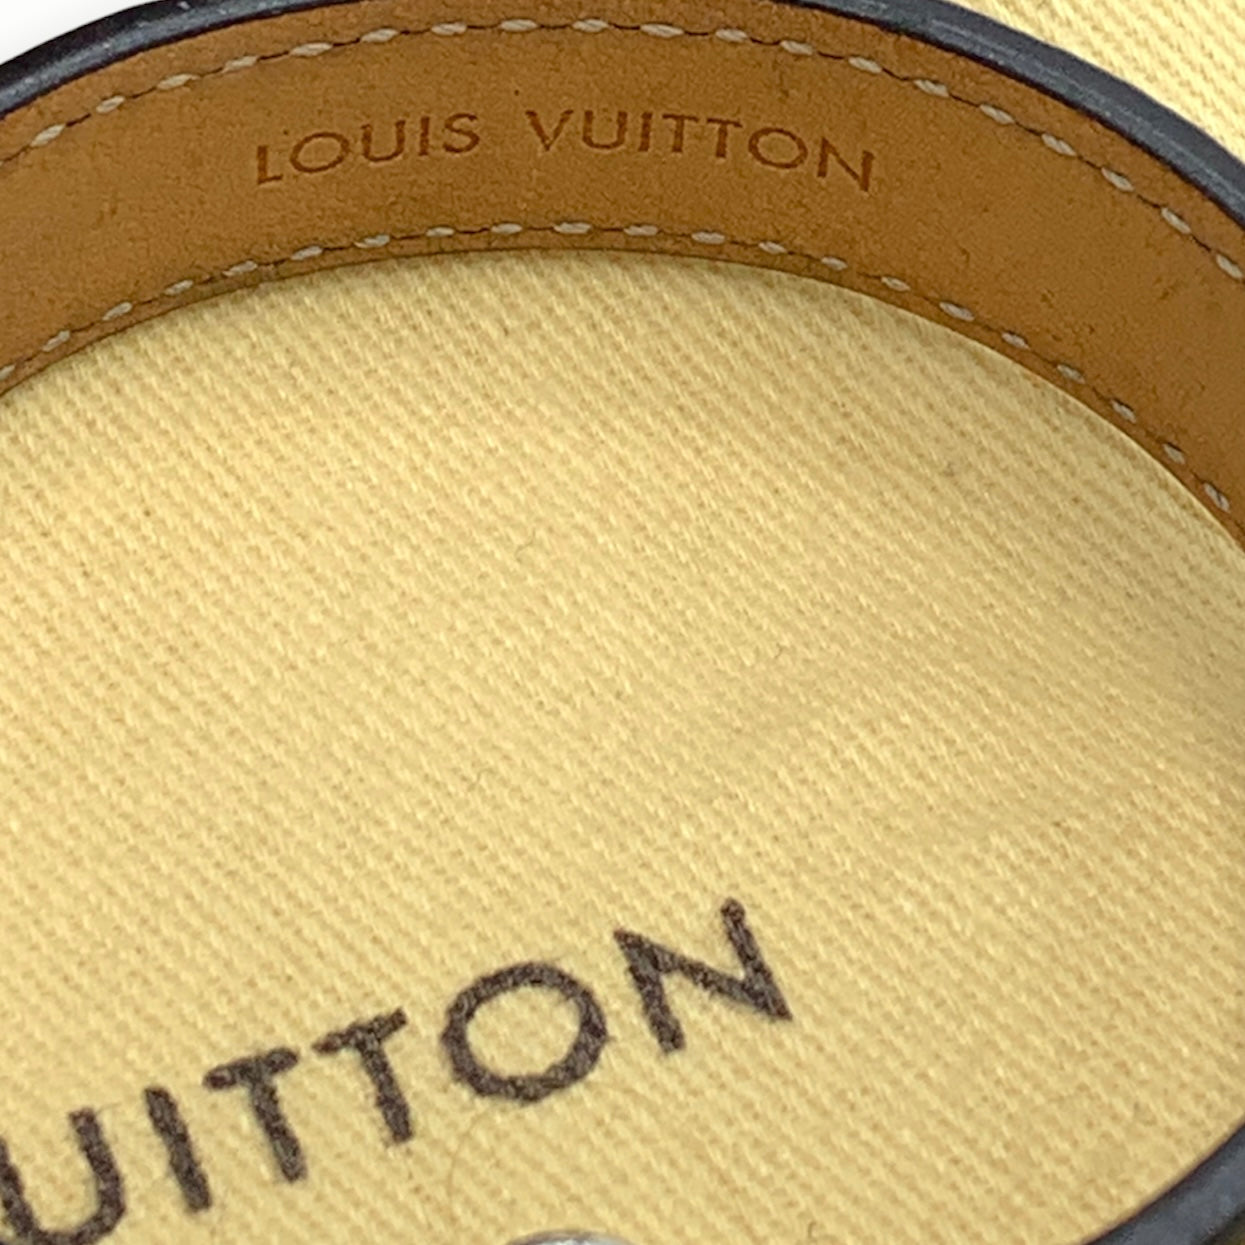 Sold at Auction: Louis Vuitton, LOUIS VUITTON Armband NANO MONOGRAM.